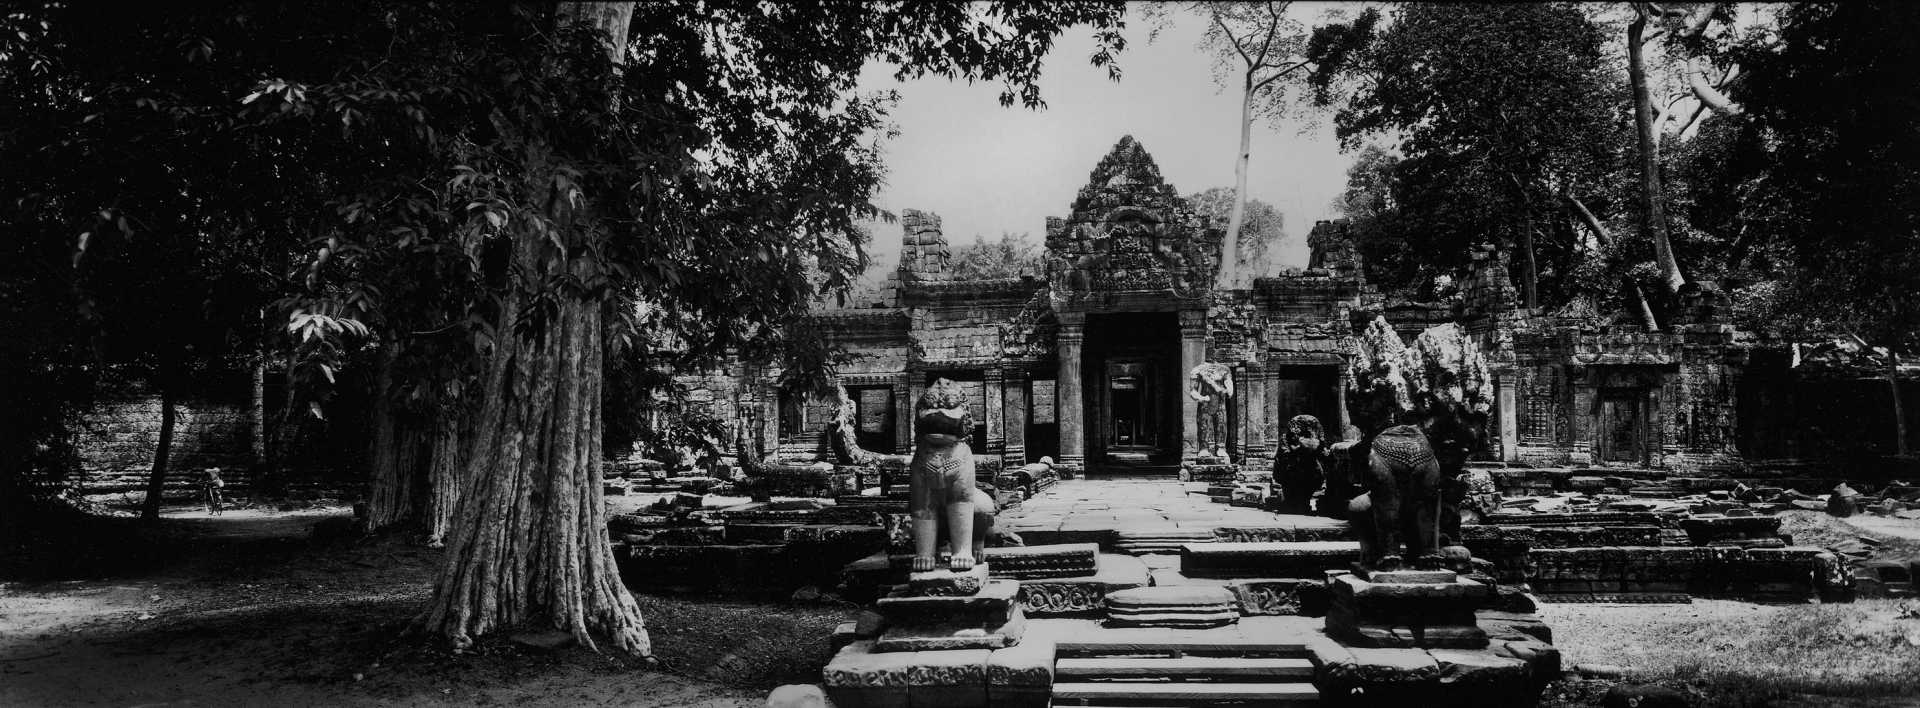  Siem Reap ruins, Cambodia. 